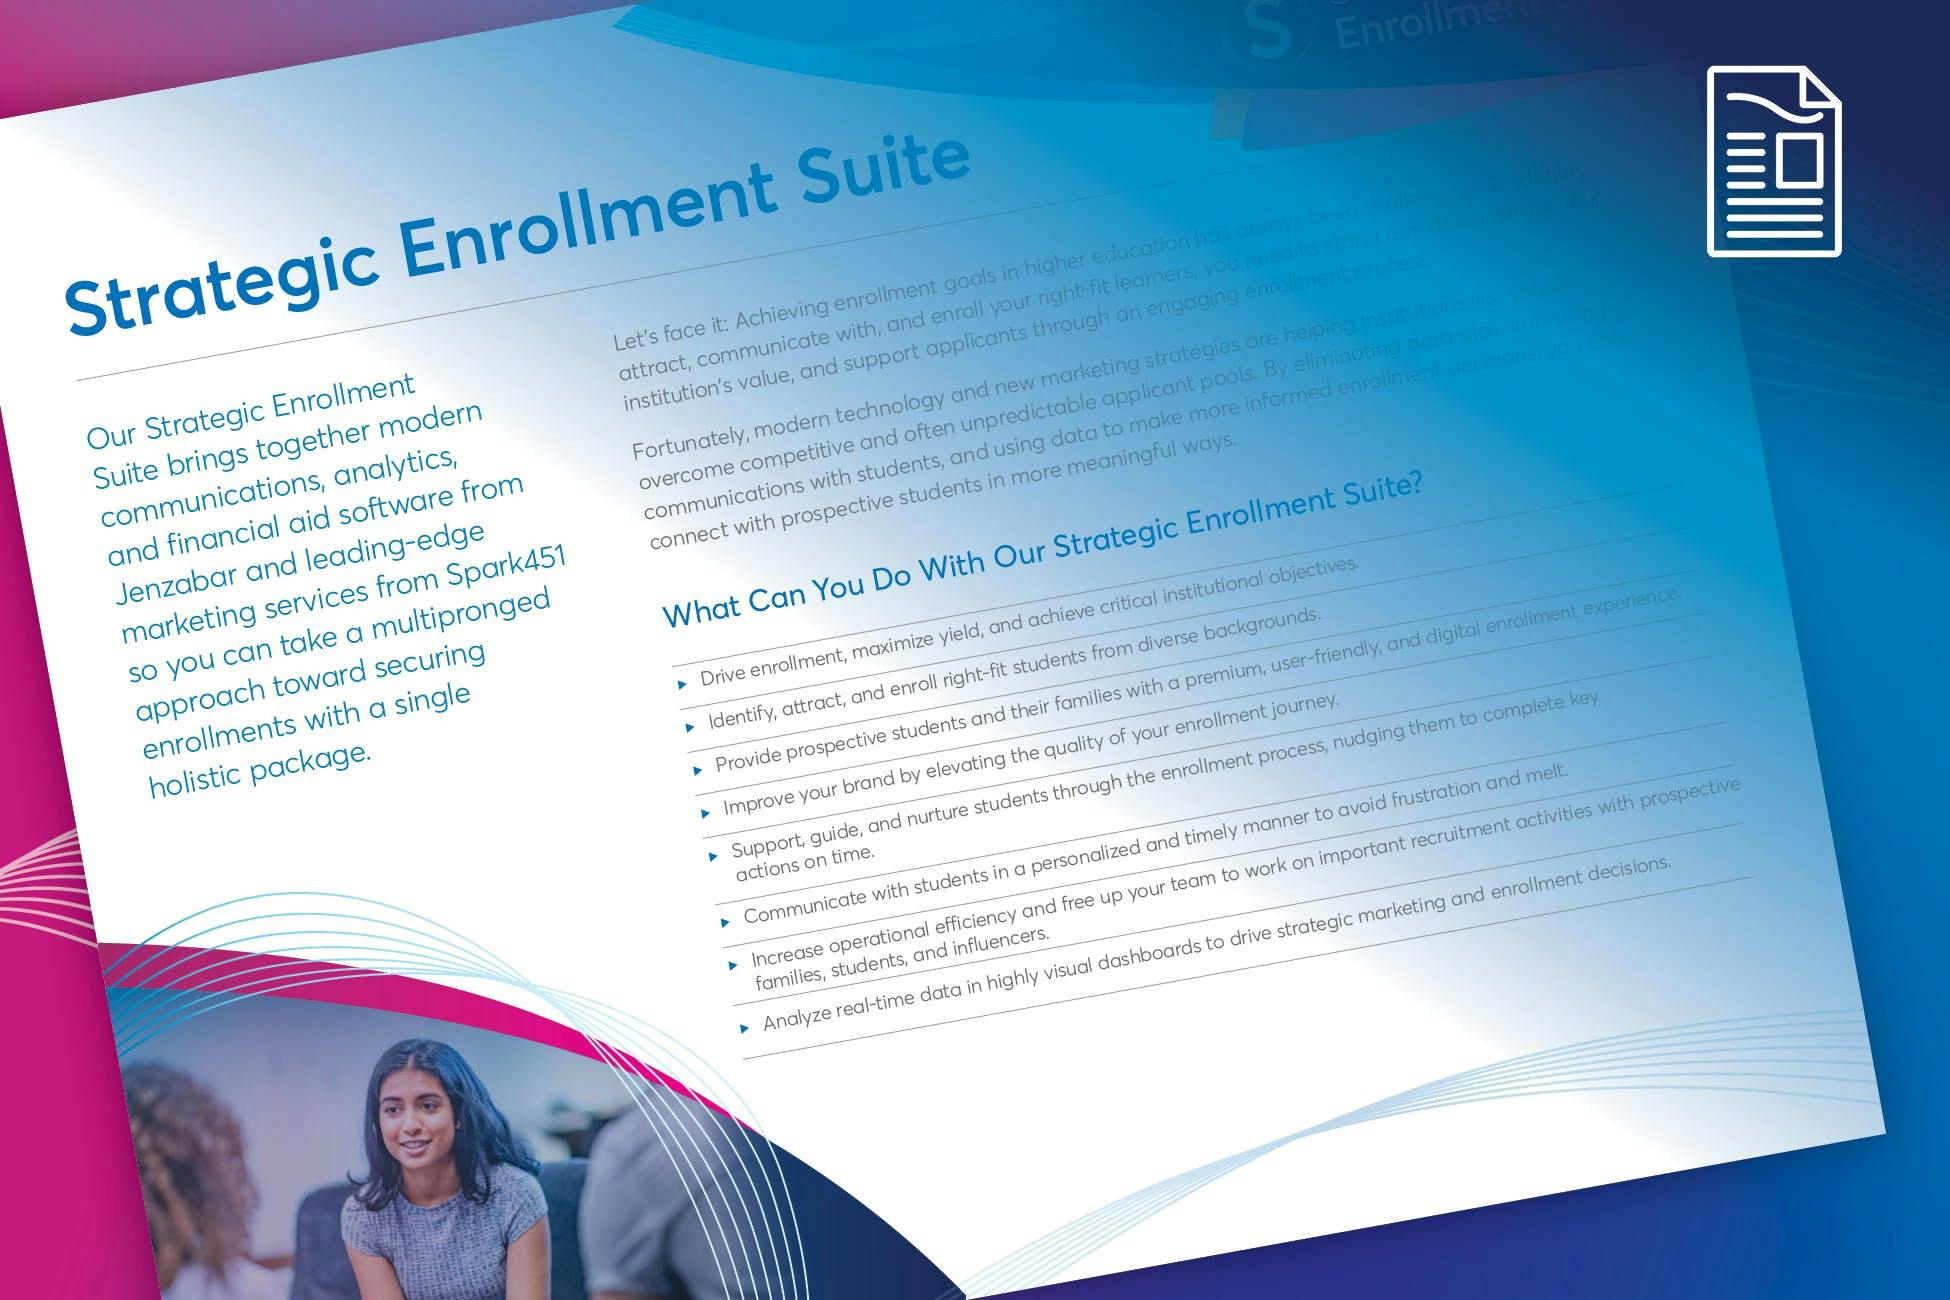 Product Sheet: Strategic Enrollment Suite